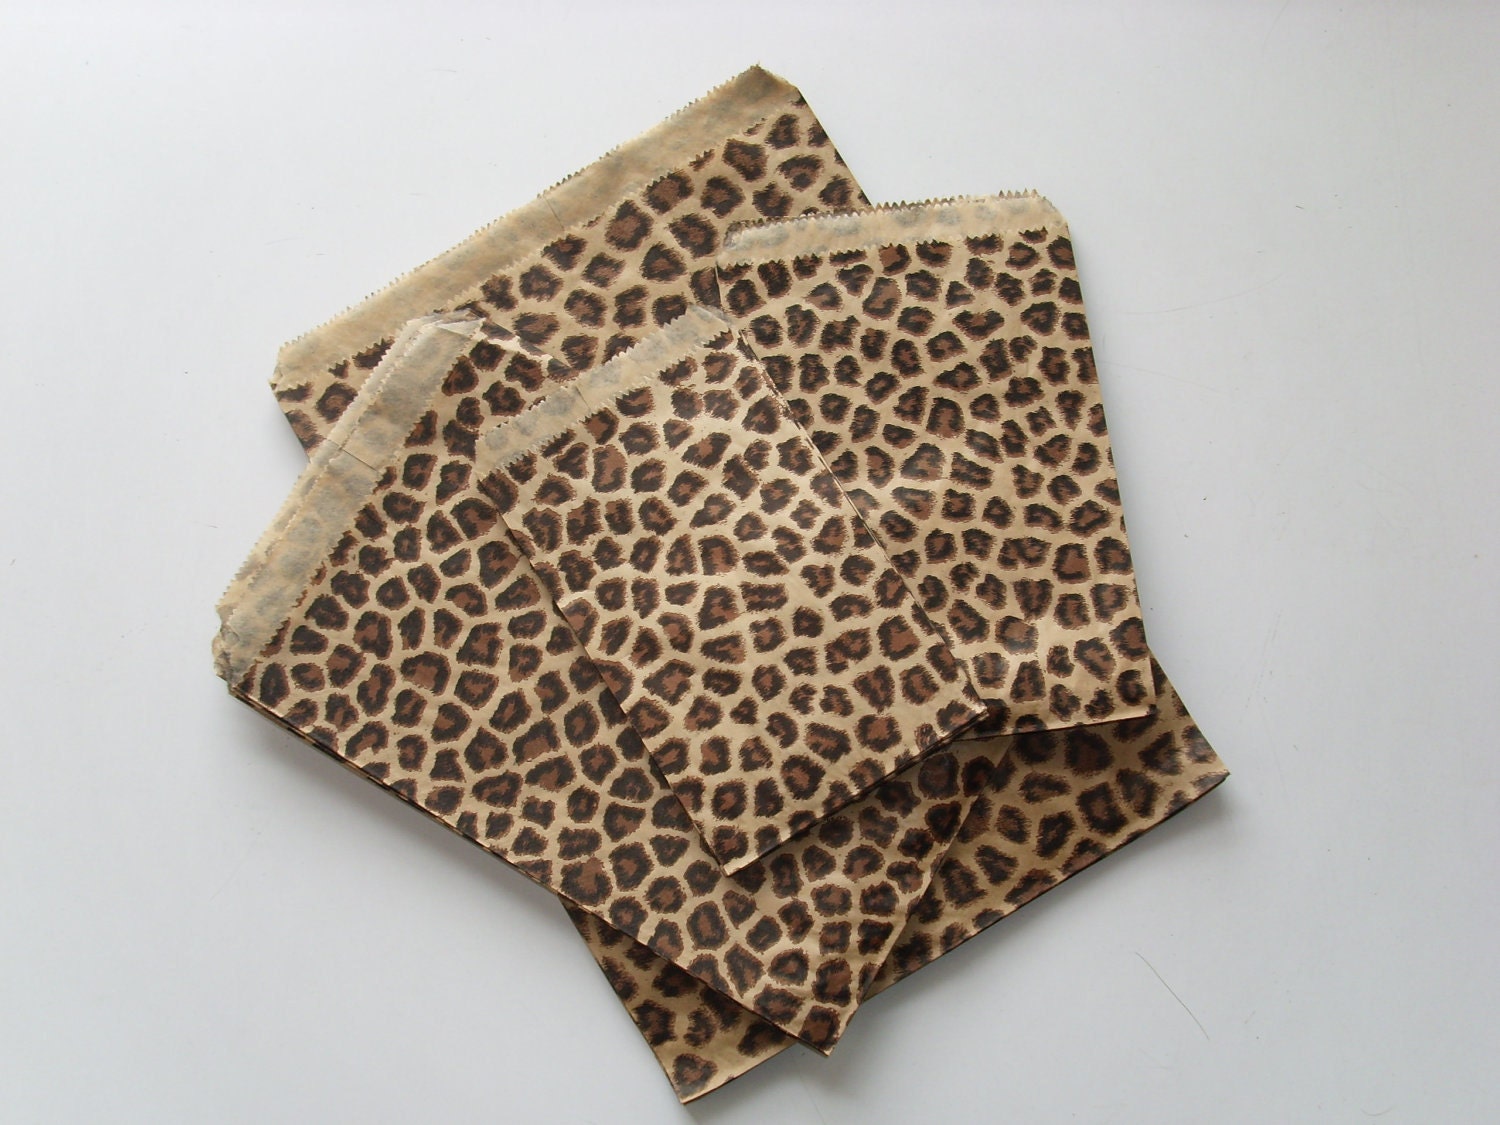 100 cheetah or leopard animal print paper bags 8.5 x 11 inch - RhinestoneHues